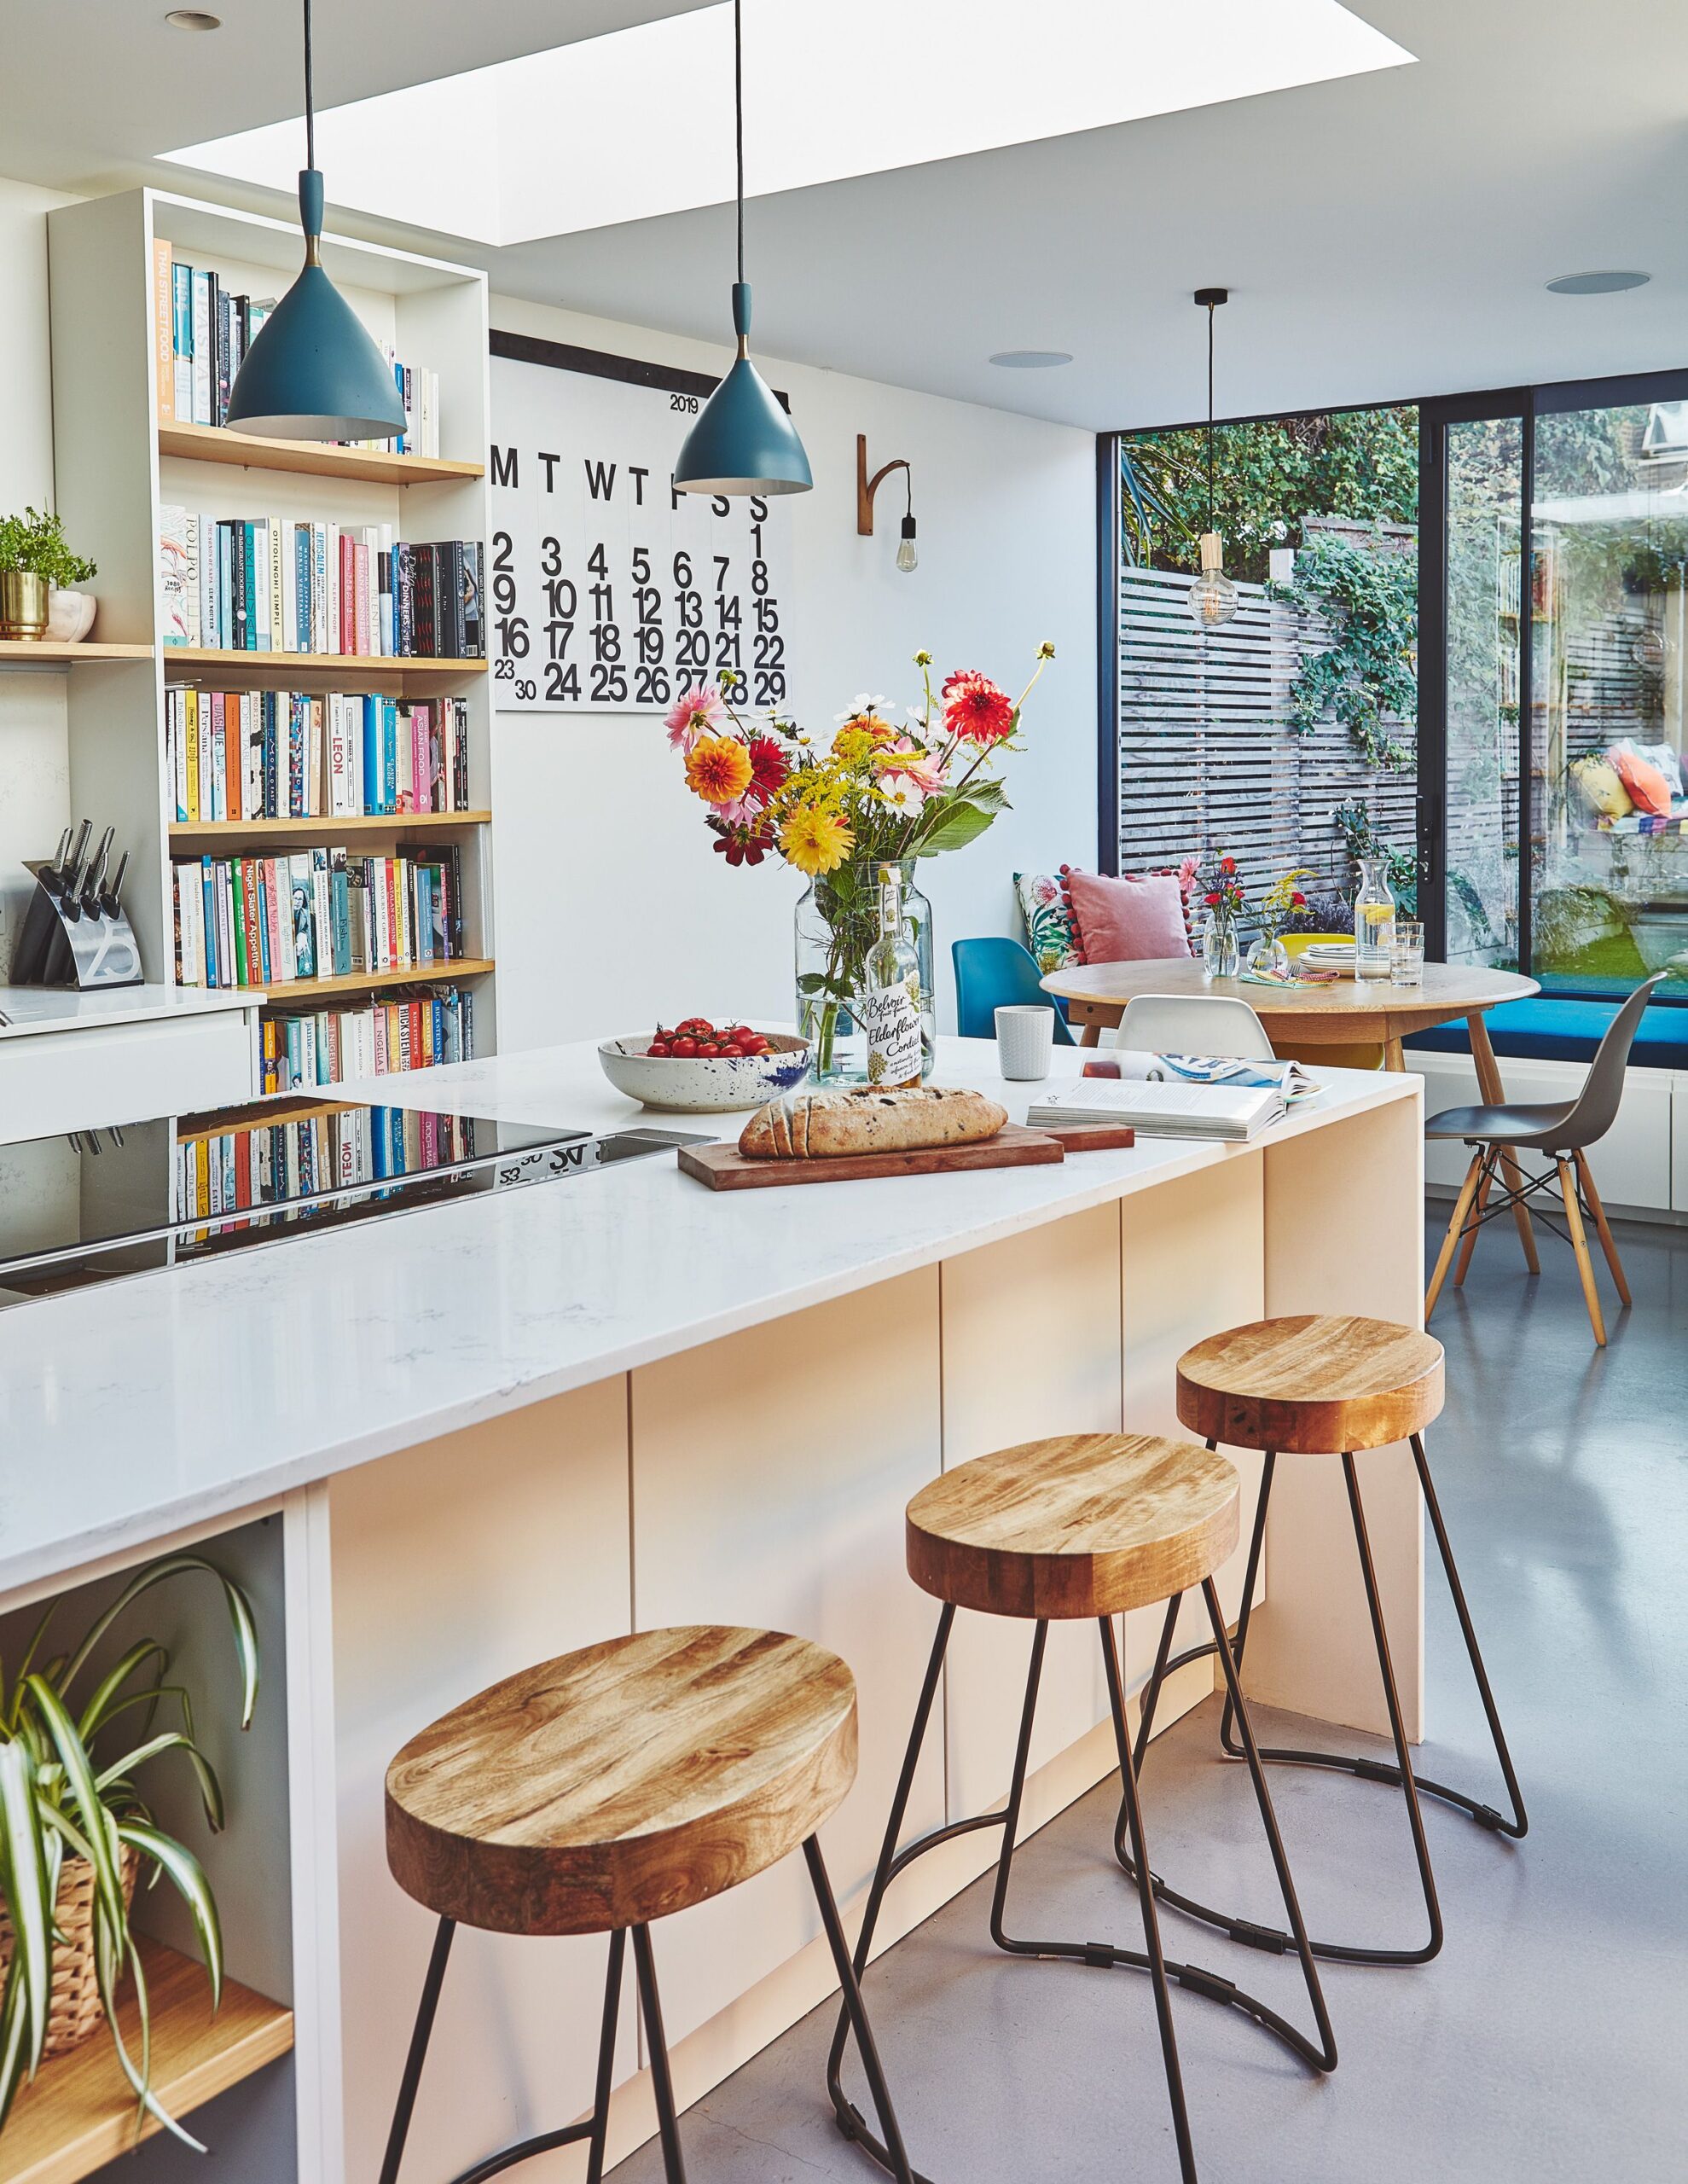 Kitchen Design Ideas to Transform Your
Space